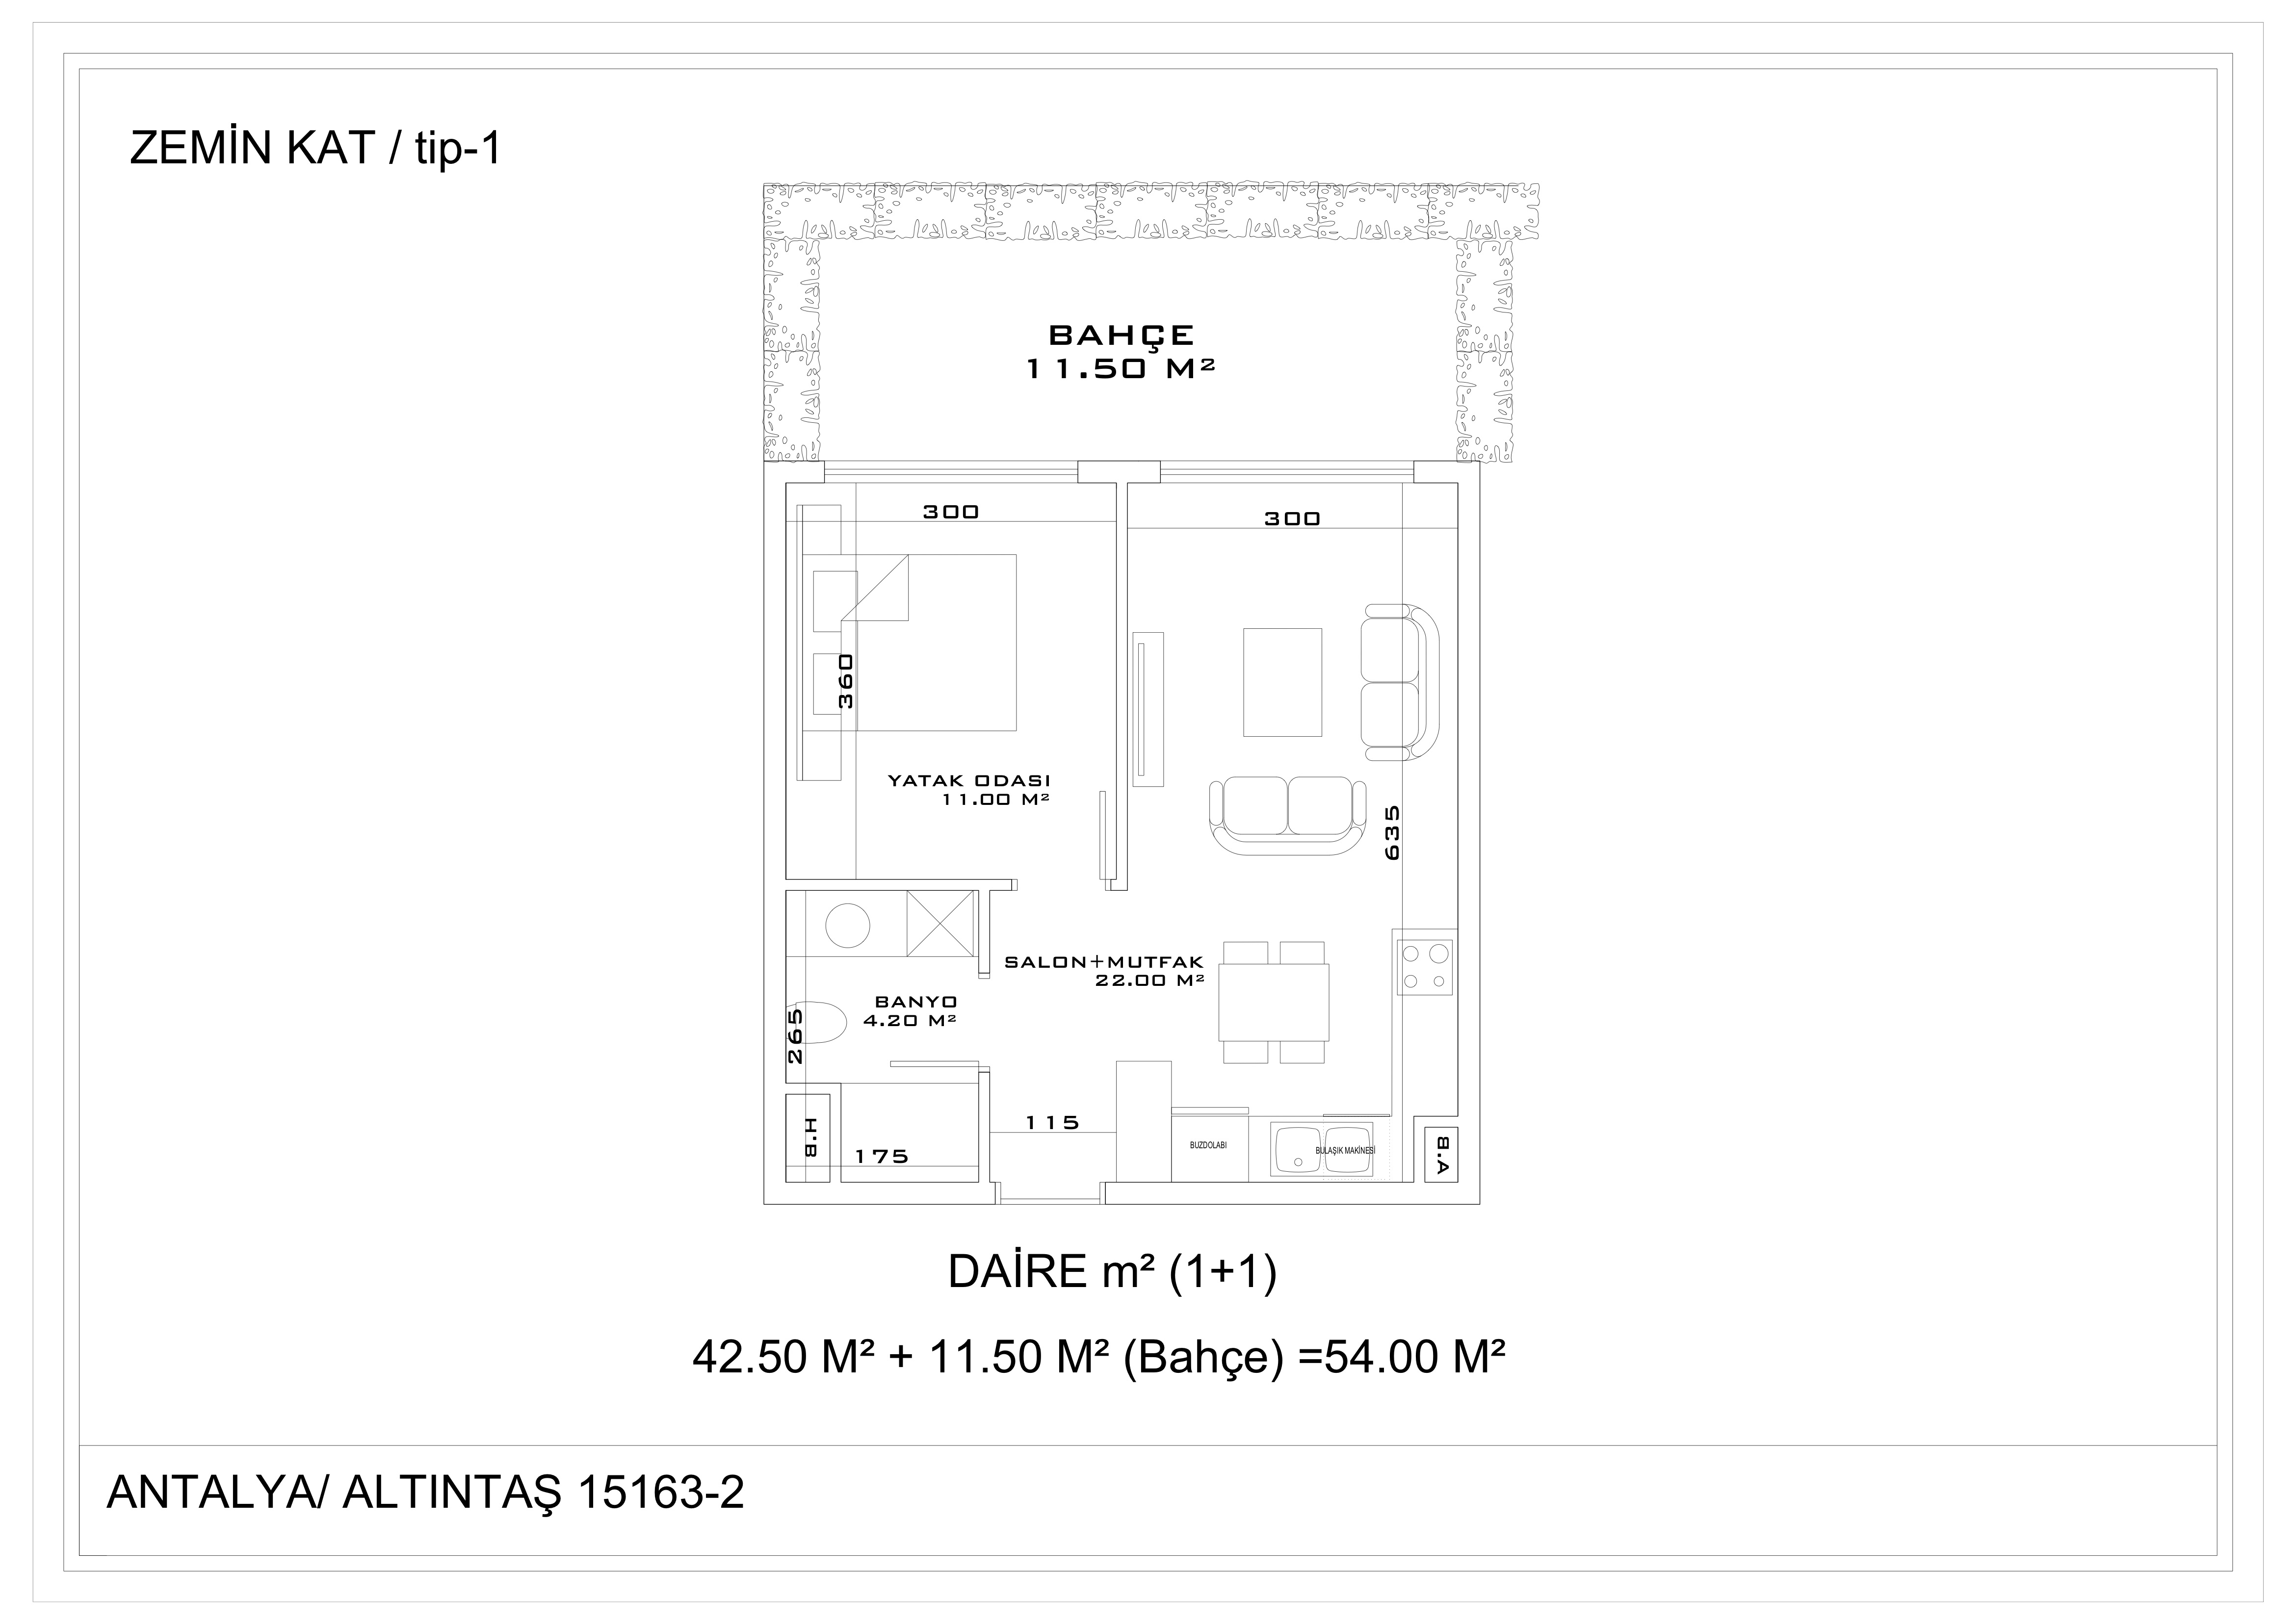 1 комнатная квартира в Анталии площадью 54м2 (терраса до 50м2 входит дополн.)